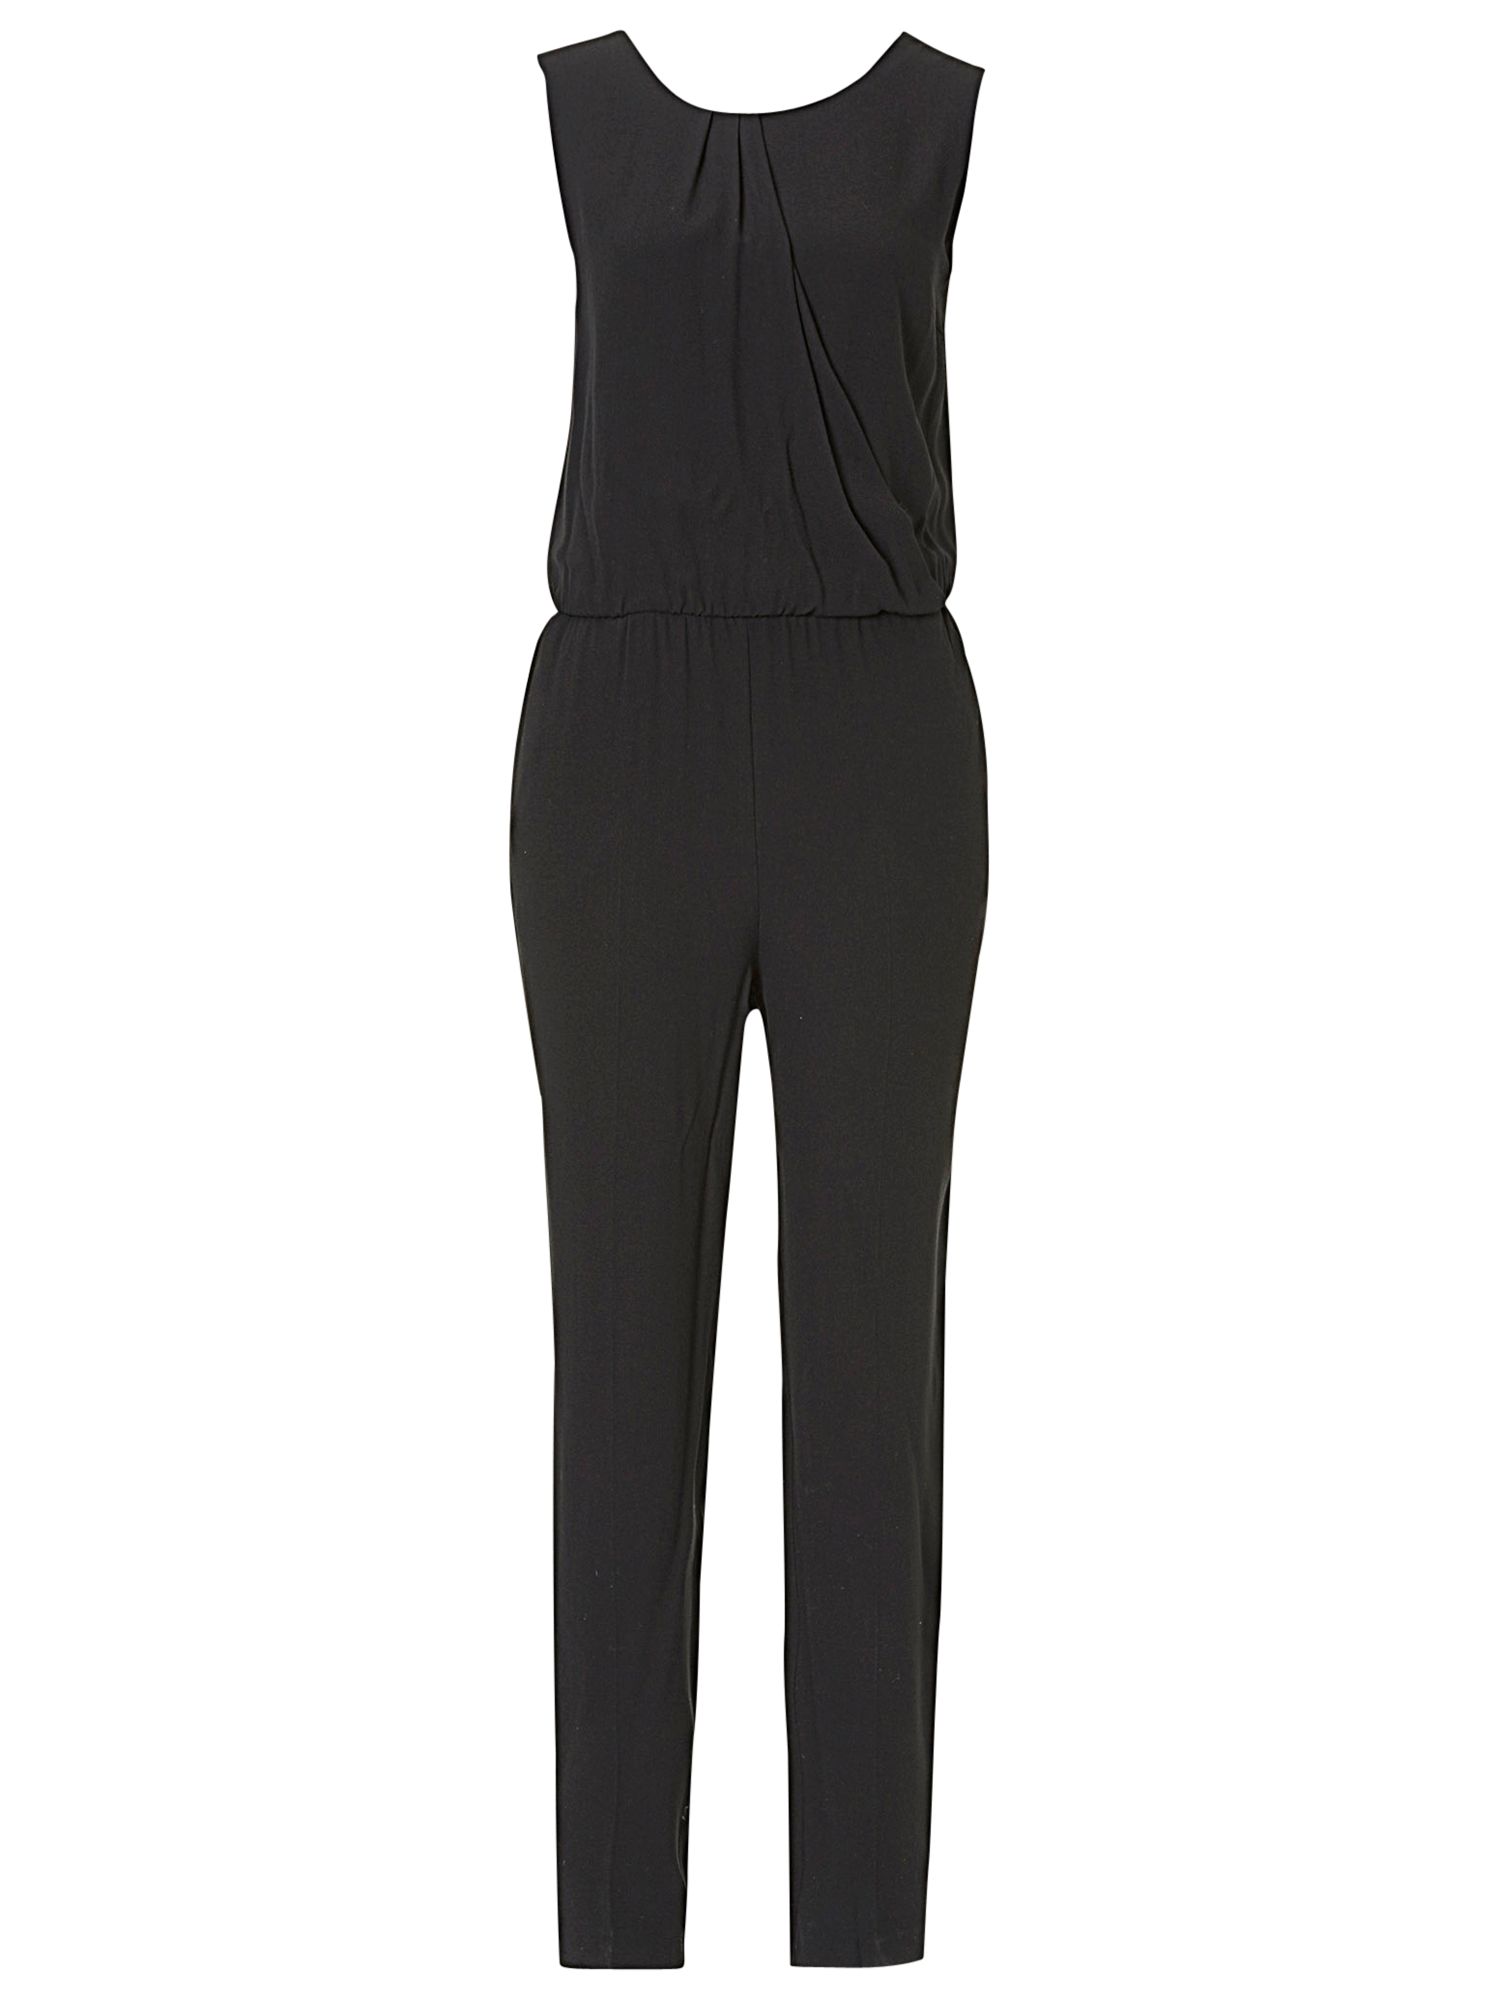 Betty & Co. Crepe Jumpsuit, Black at John Lewis & Partners